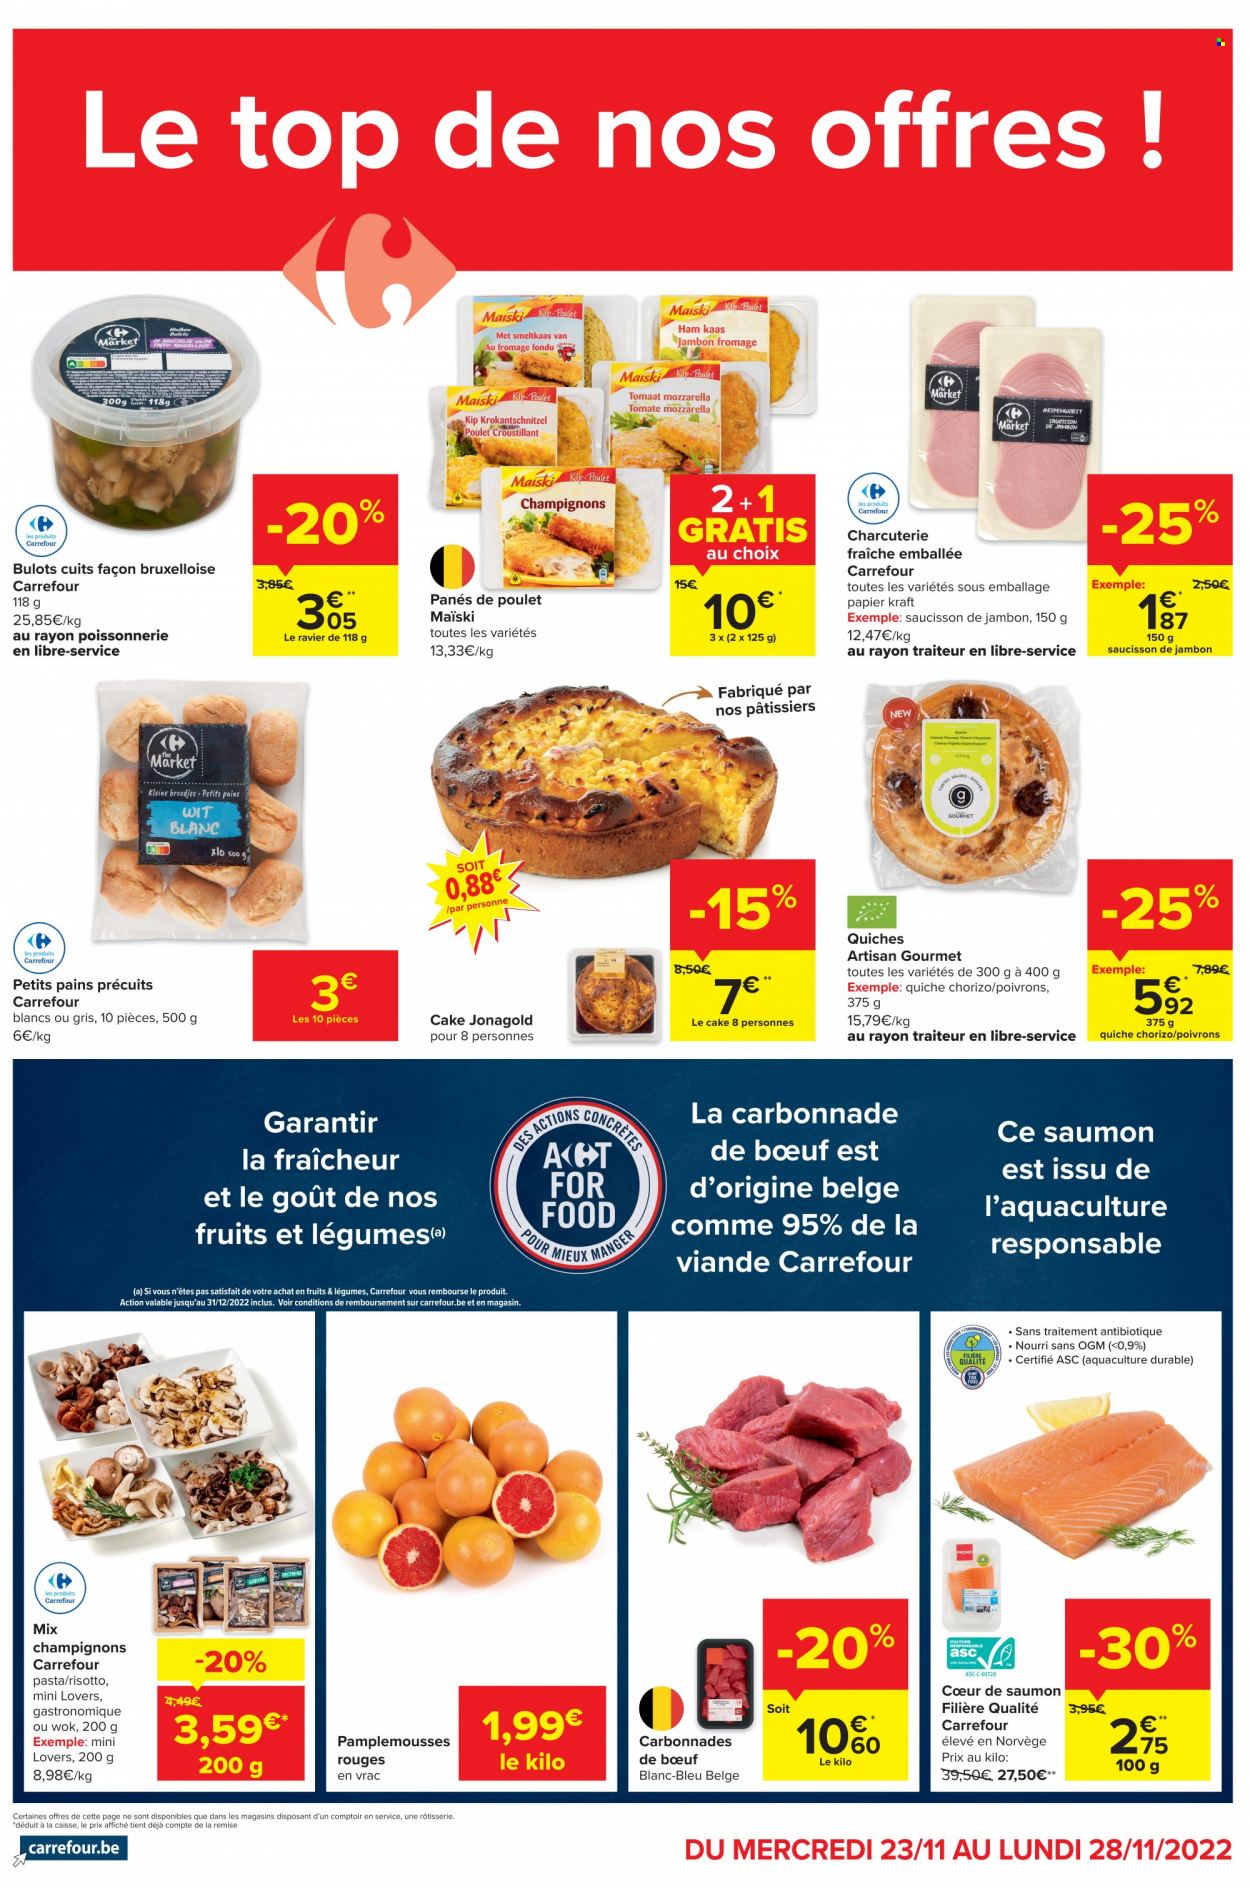 thumbnail - Carrefour-aanbieding - 23/11/2022 - 28/11/2022 -  producten in de aanbieding - champignons, risotto, chorizo, pasta, top. Pagina 2.